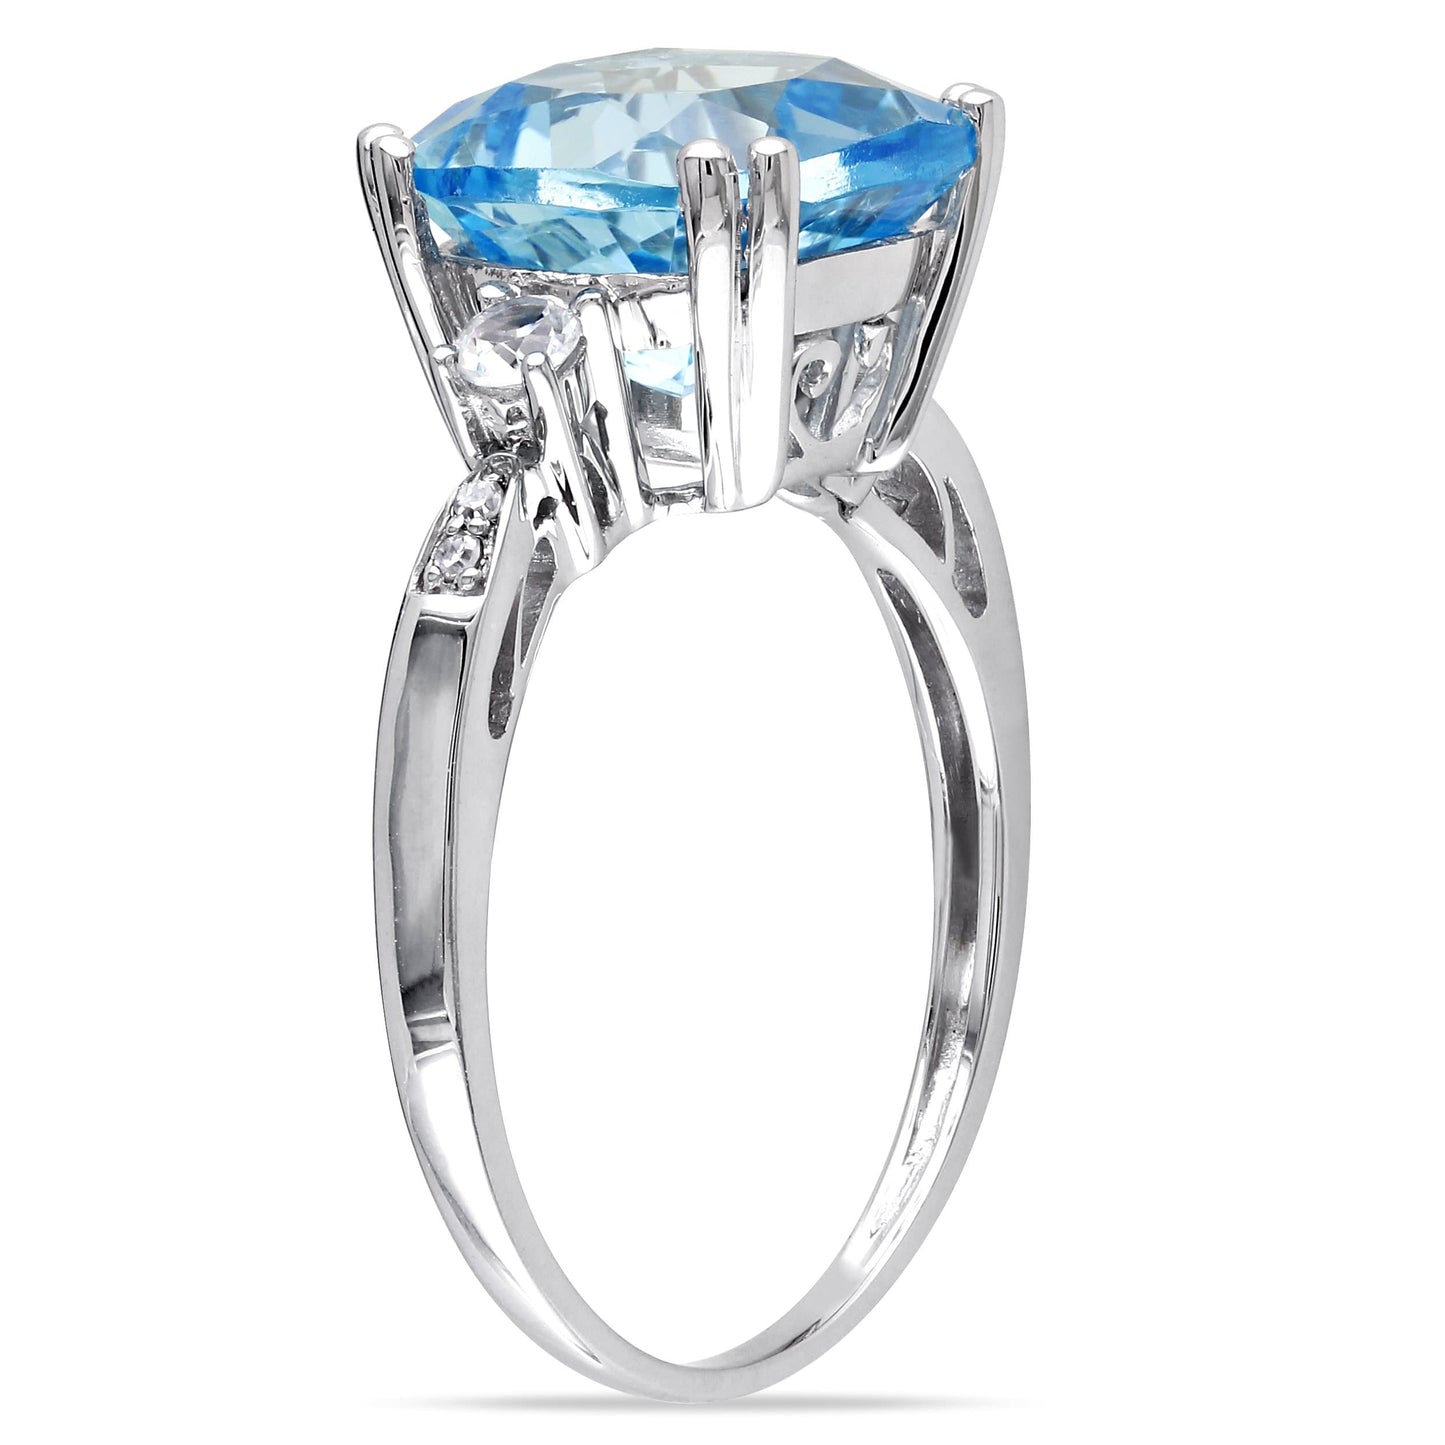 Sophia B 5 5/8 Blue Topaz, Created White Sapphire & Diamond Ring